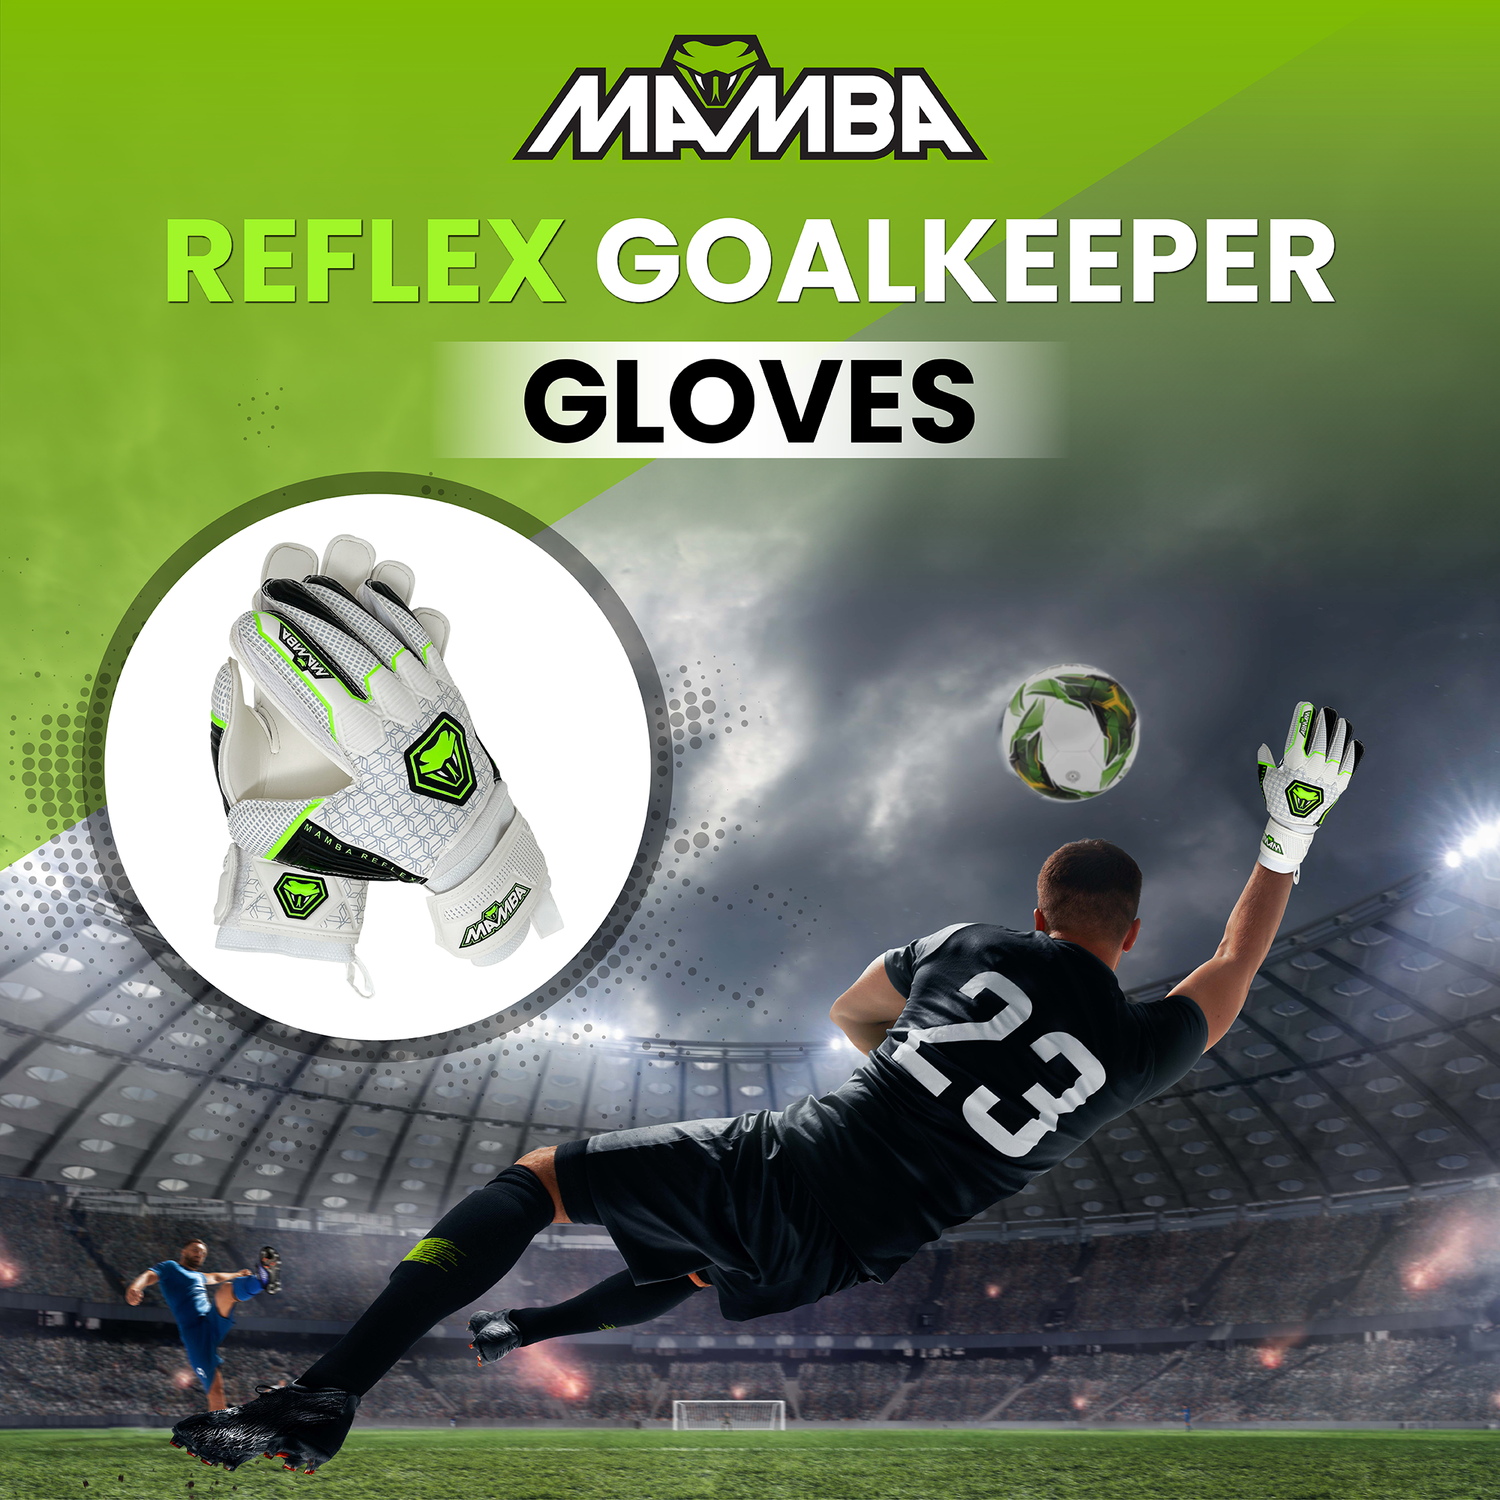 Mamba Reflex goalie gloves football